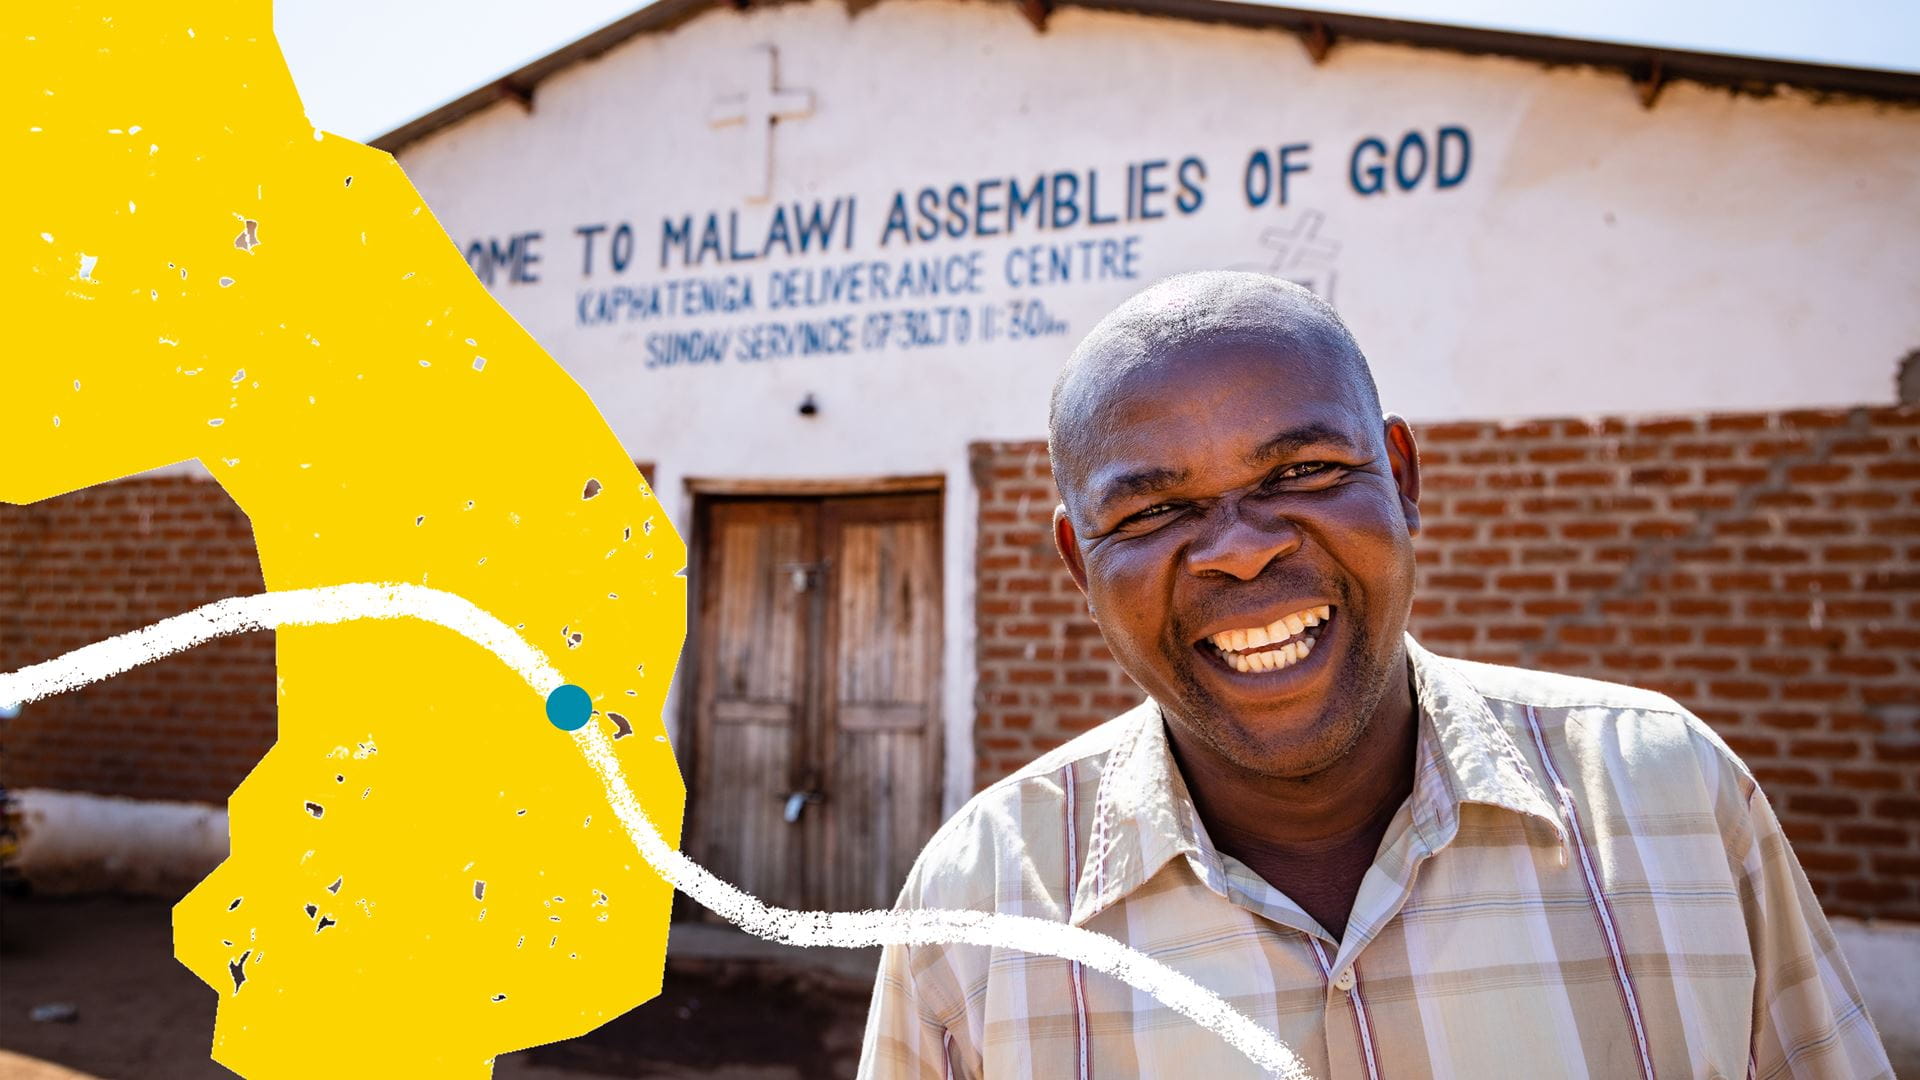 Alishikado, pastor of Kaphatenga Assemblies of God Church in Salima, Malawi